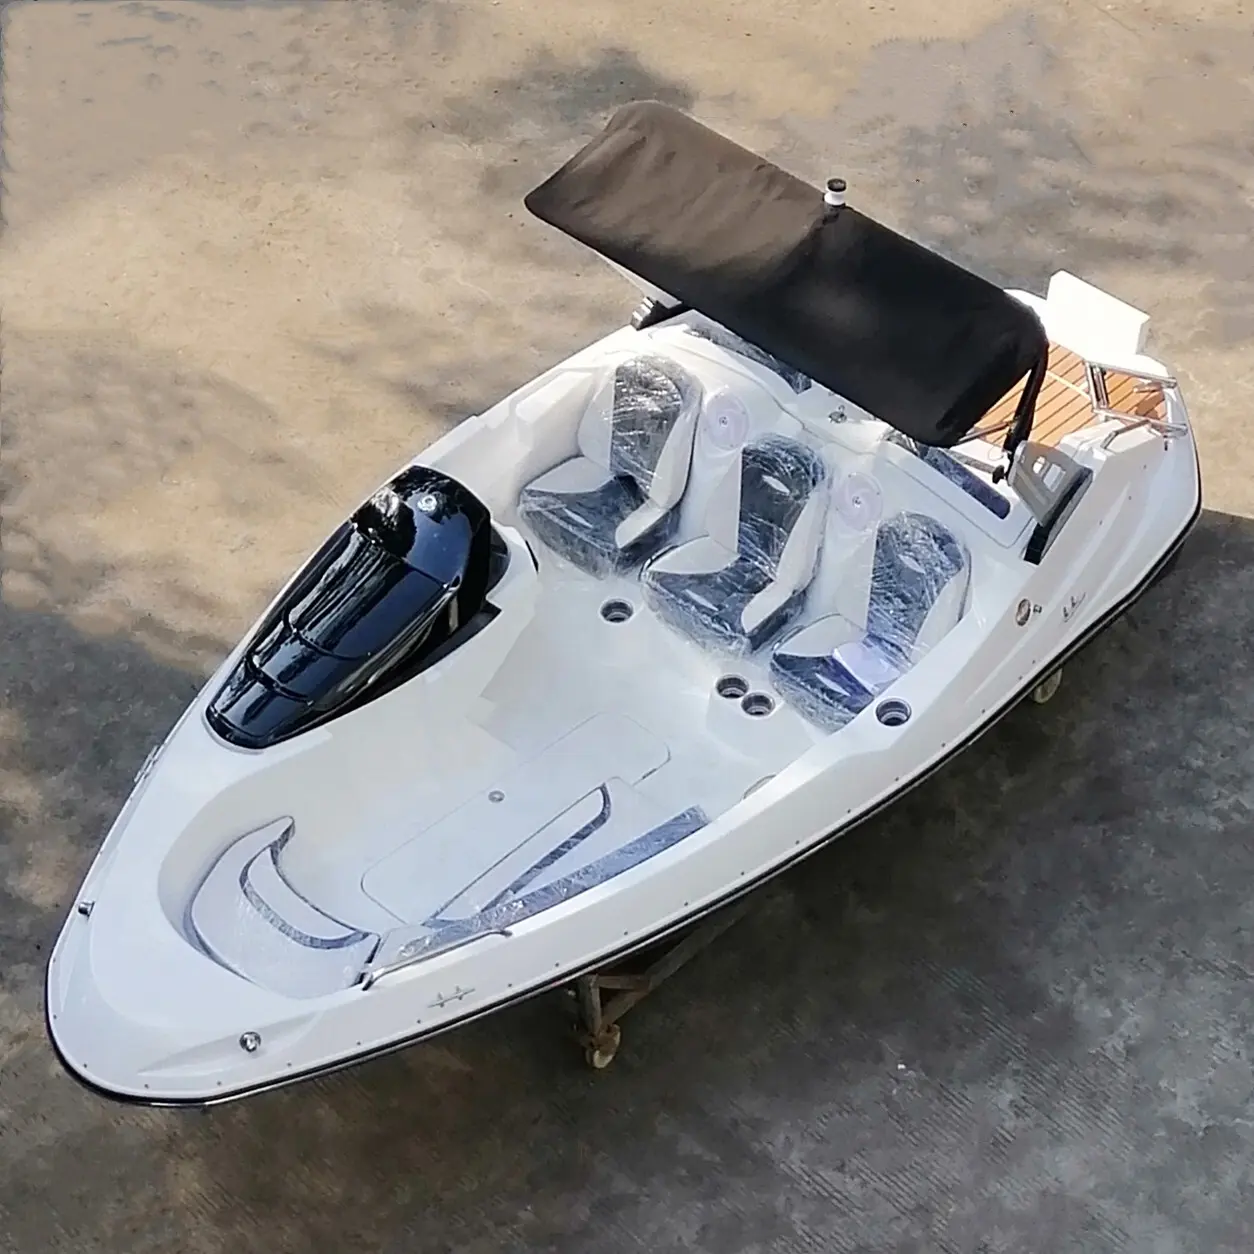 FLIT-480 Fiberglass Small Outboard Engine Style Ski Yacht